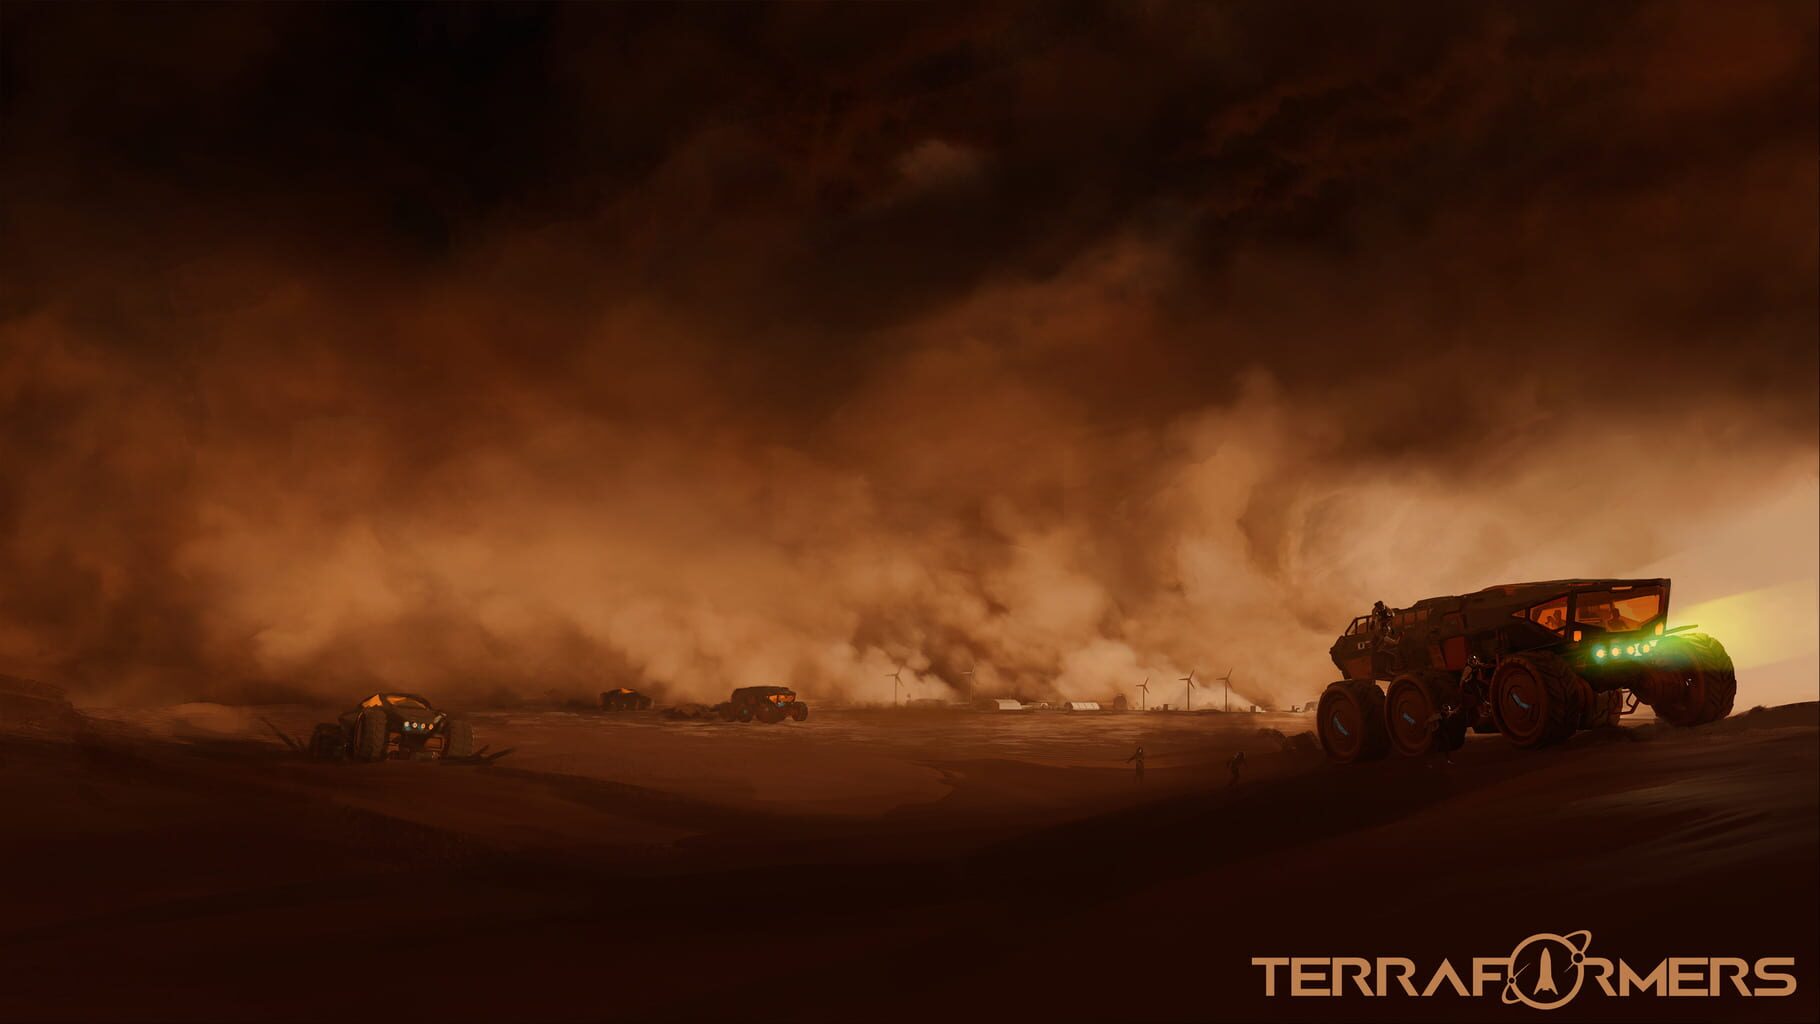 Terraformers artwork